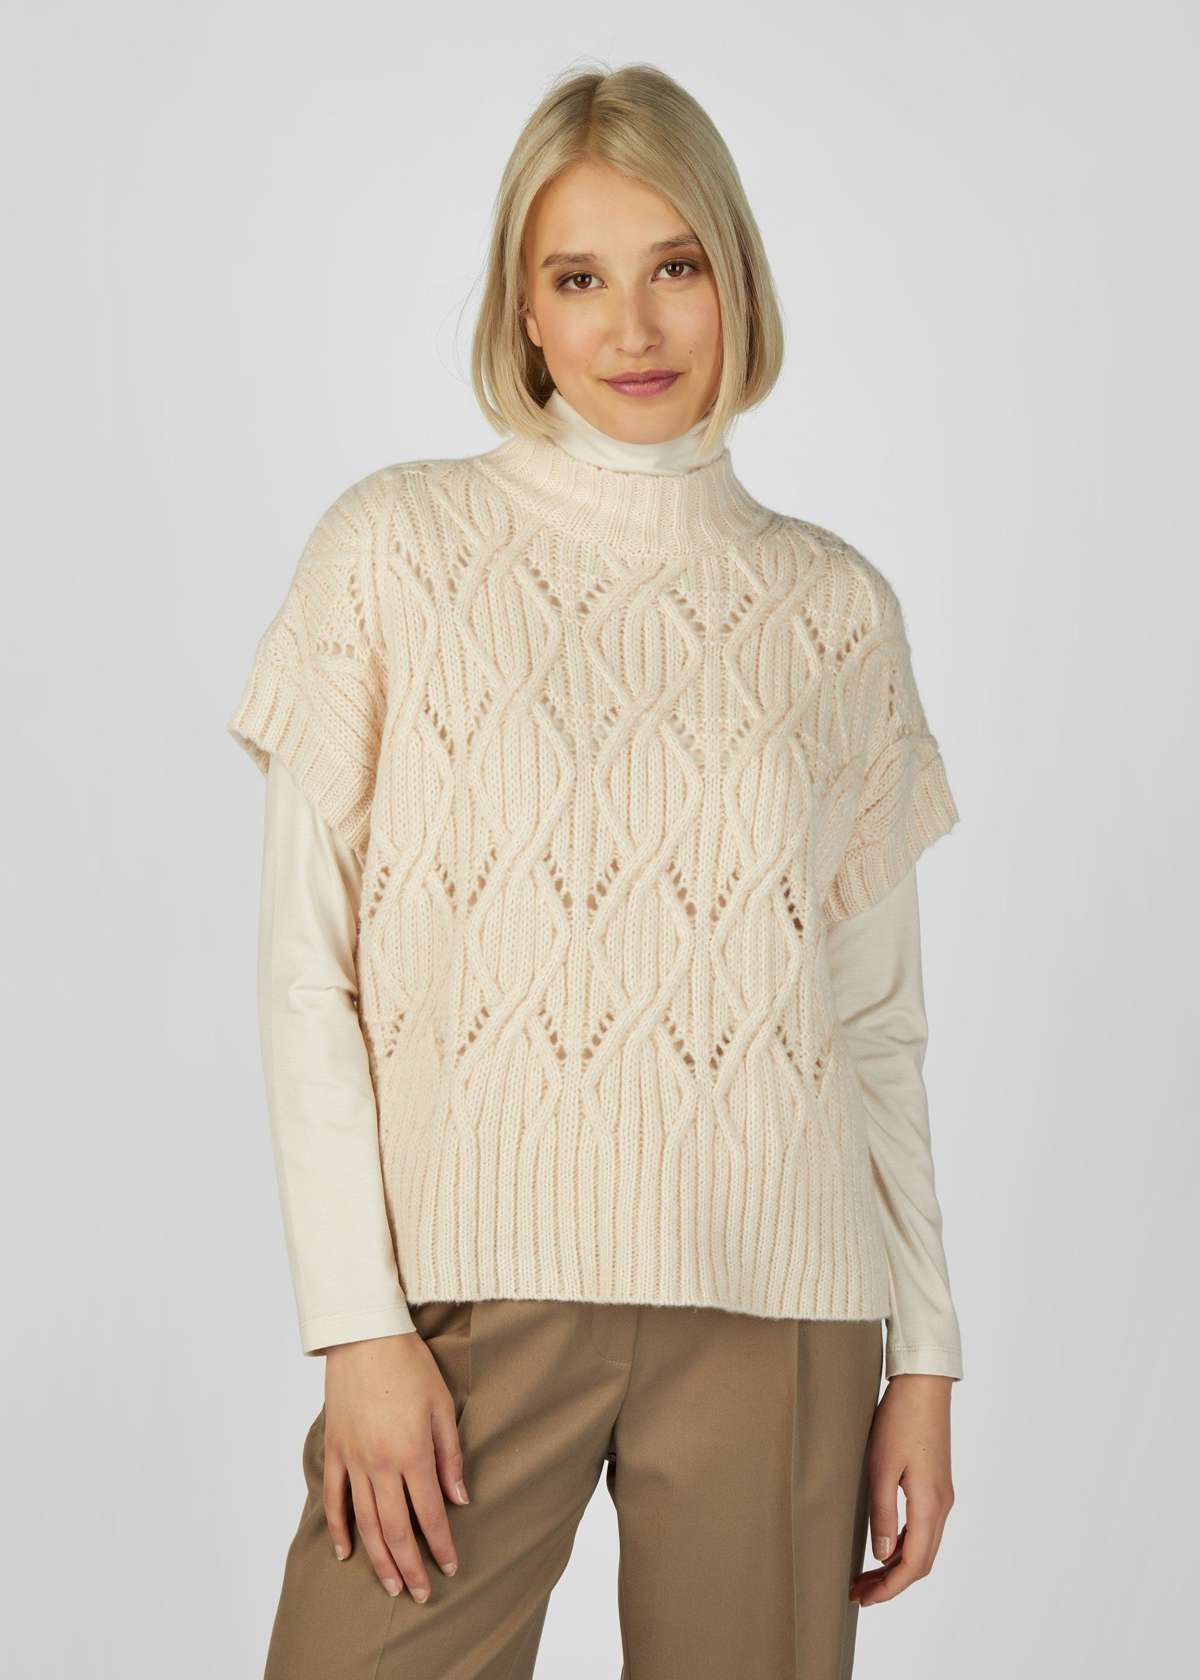 Вязаный свитер-майка